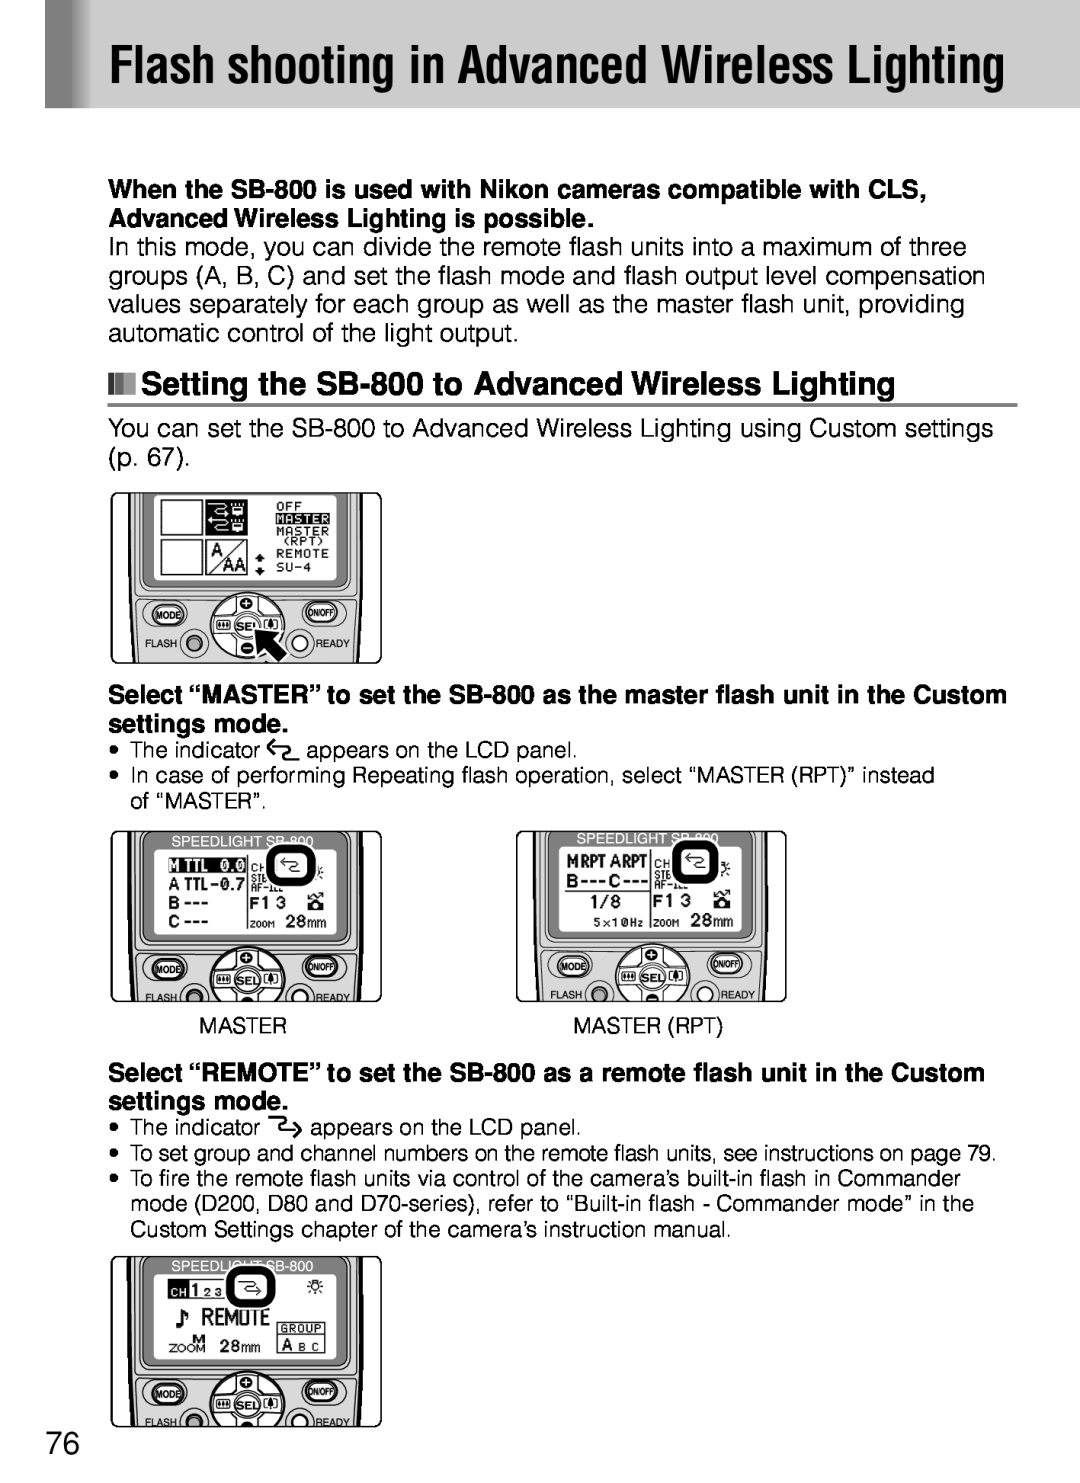 Nikon instruction manual Flash shooting in Advanced Wireless Lighting, Setting the SB-800 to Advanced Wireless Lighting 